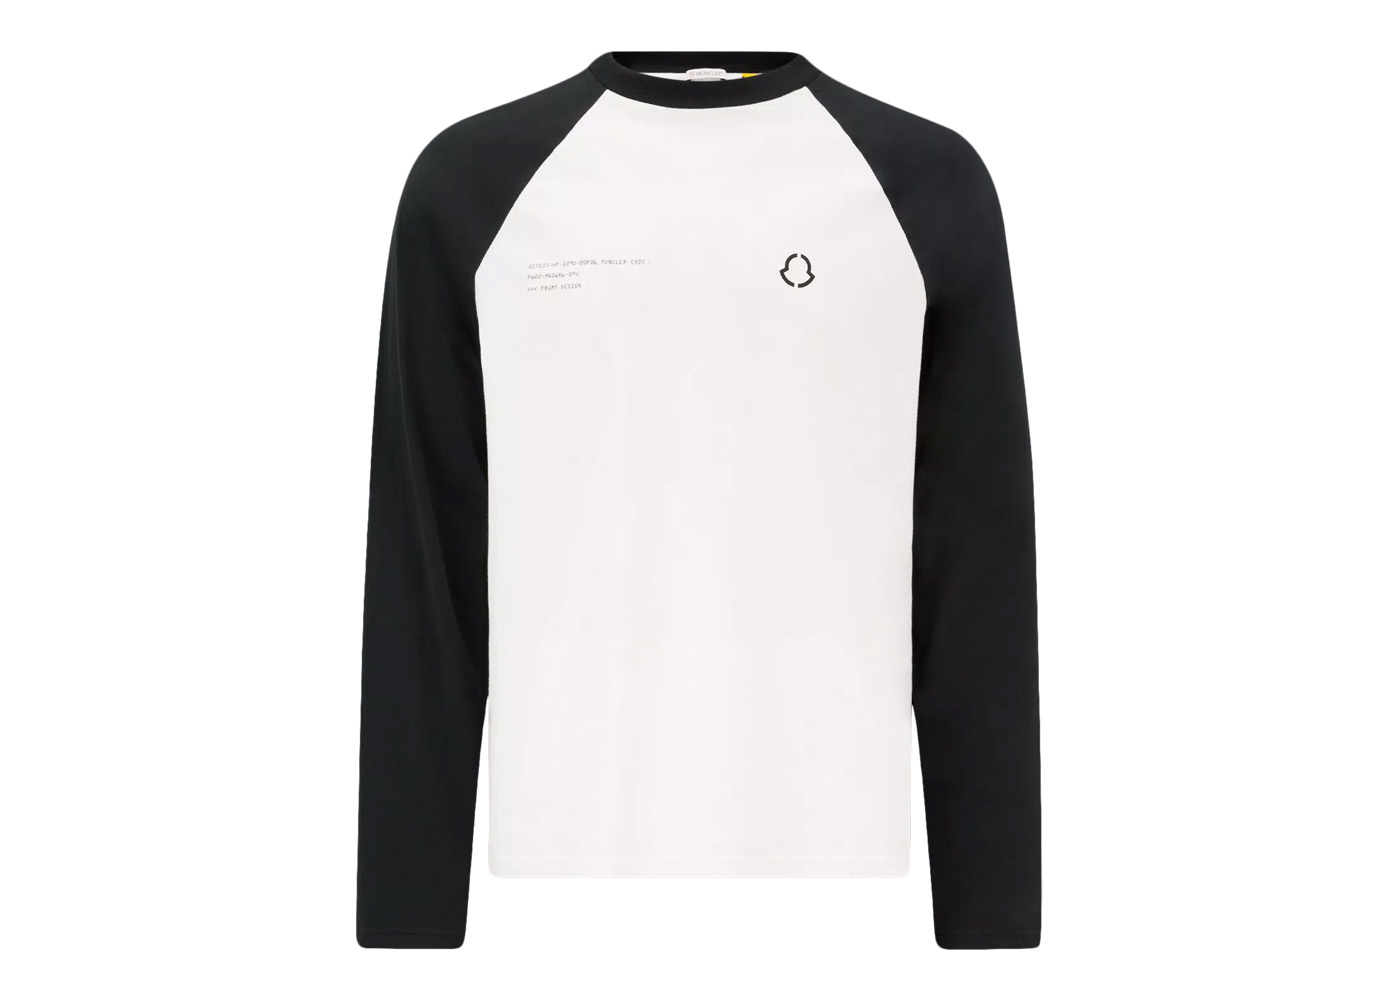 Moncler Hiroshi Fujiwara x Fragment Logo Long Sleeve T-Shirt Black